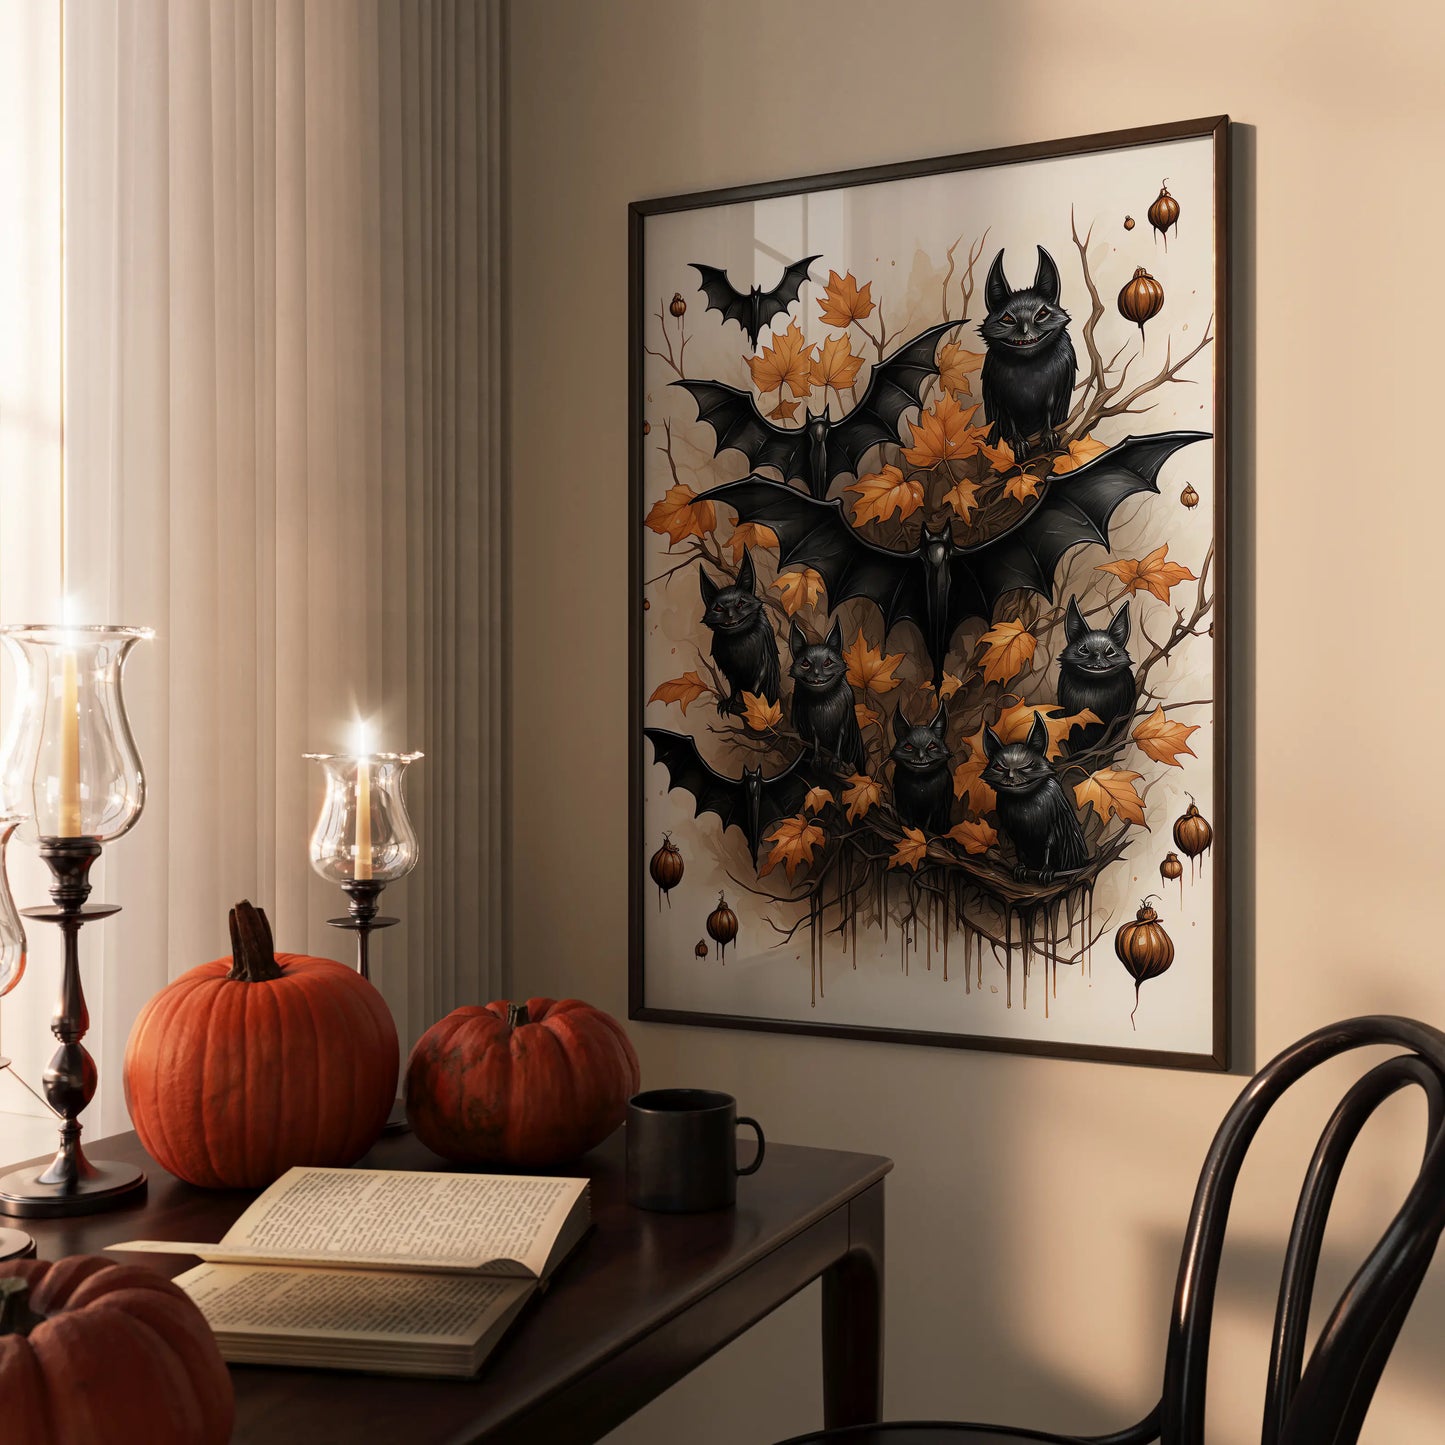 Bats No 1 - Halloween - Watercolor - Poster